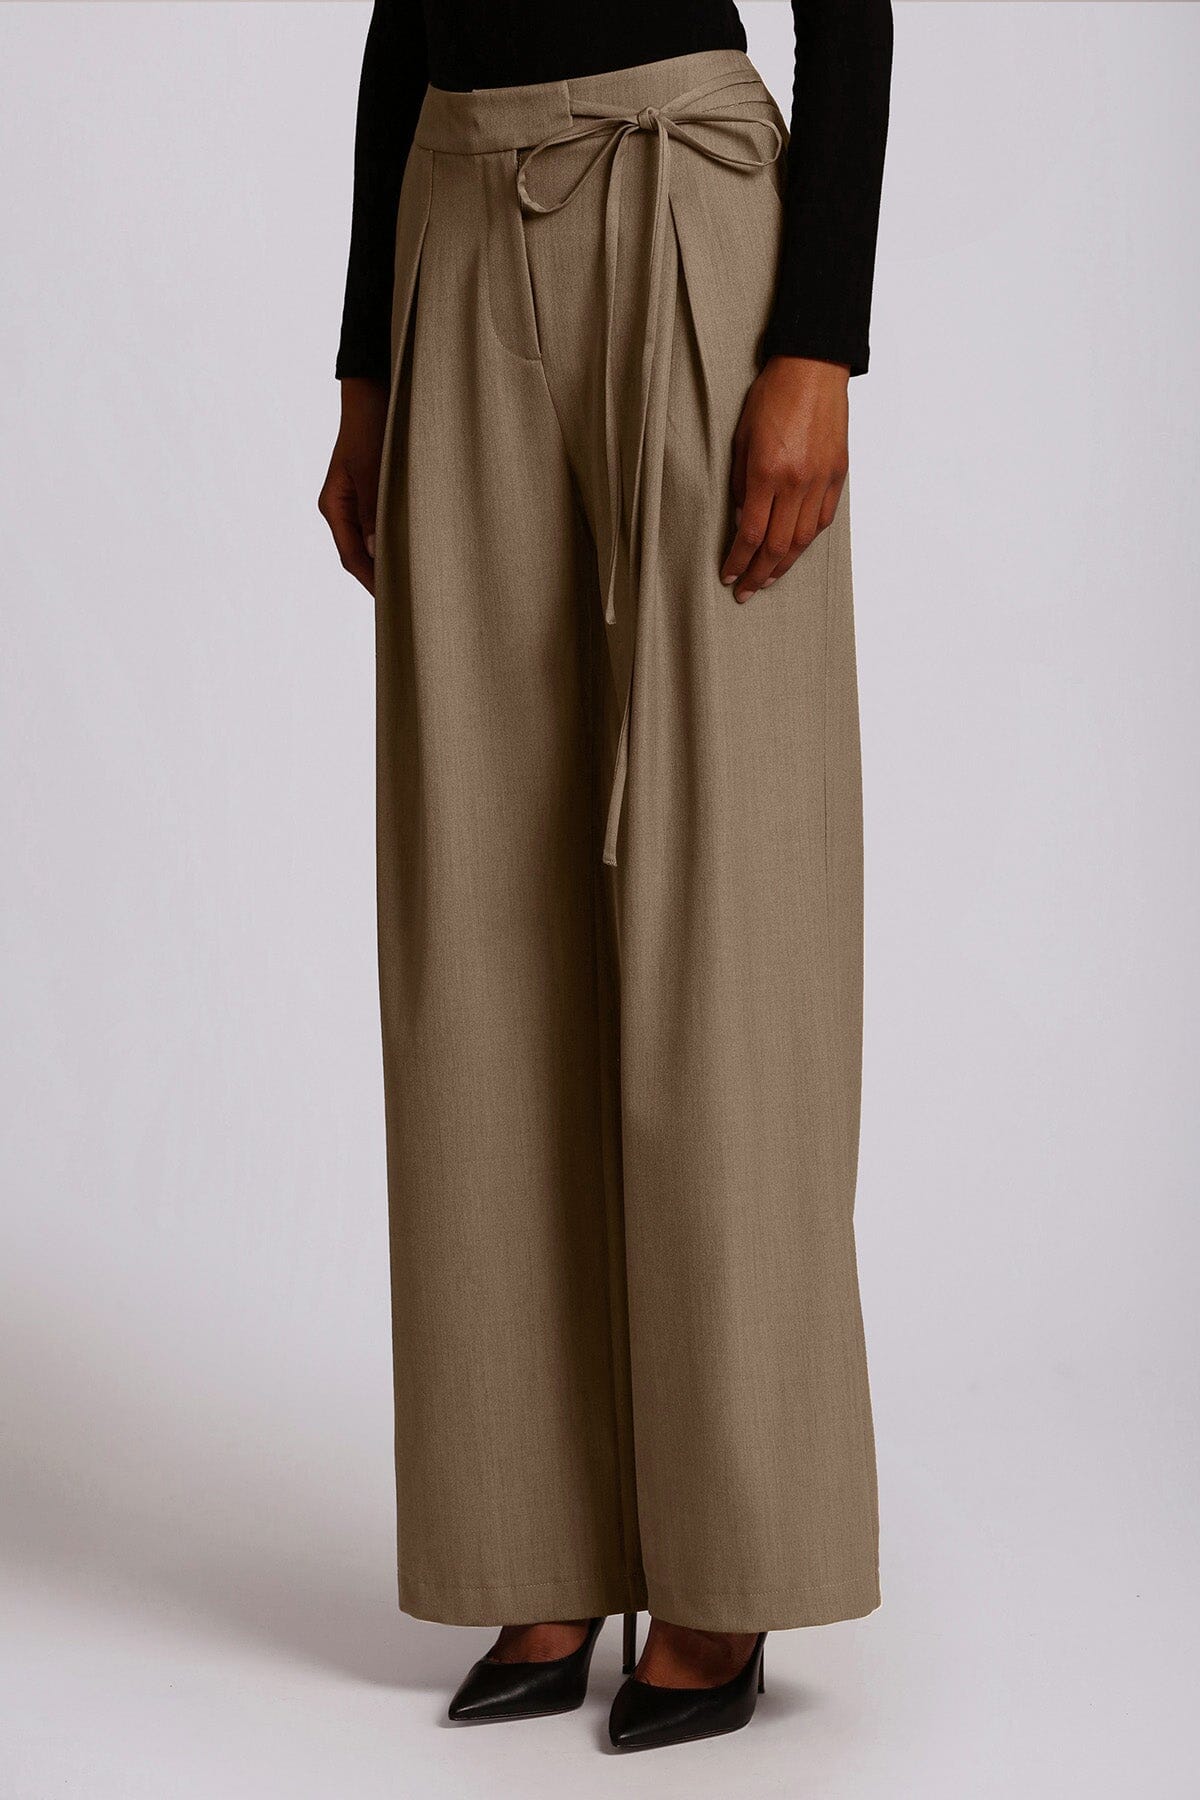 taupe brown wide leg tie belt trouser pants figure flattering cute lightweight work bottoms for women